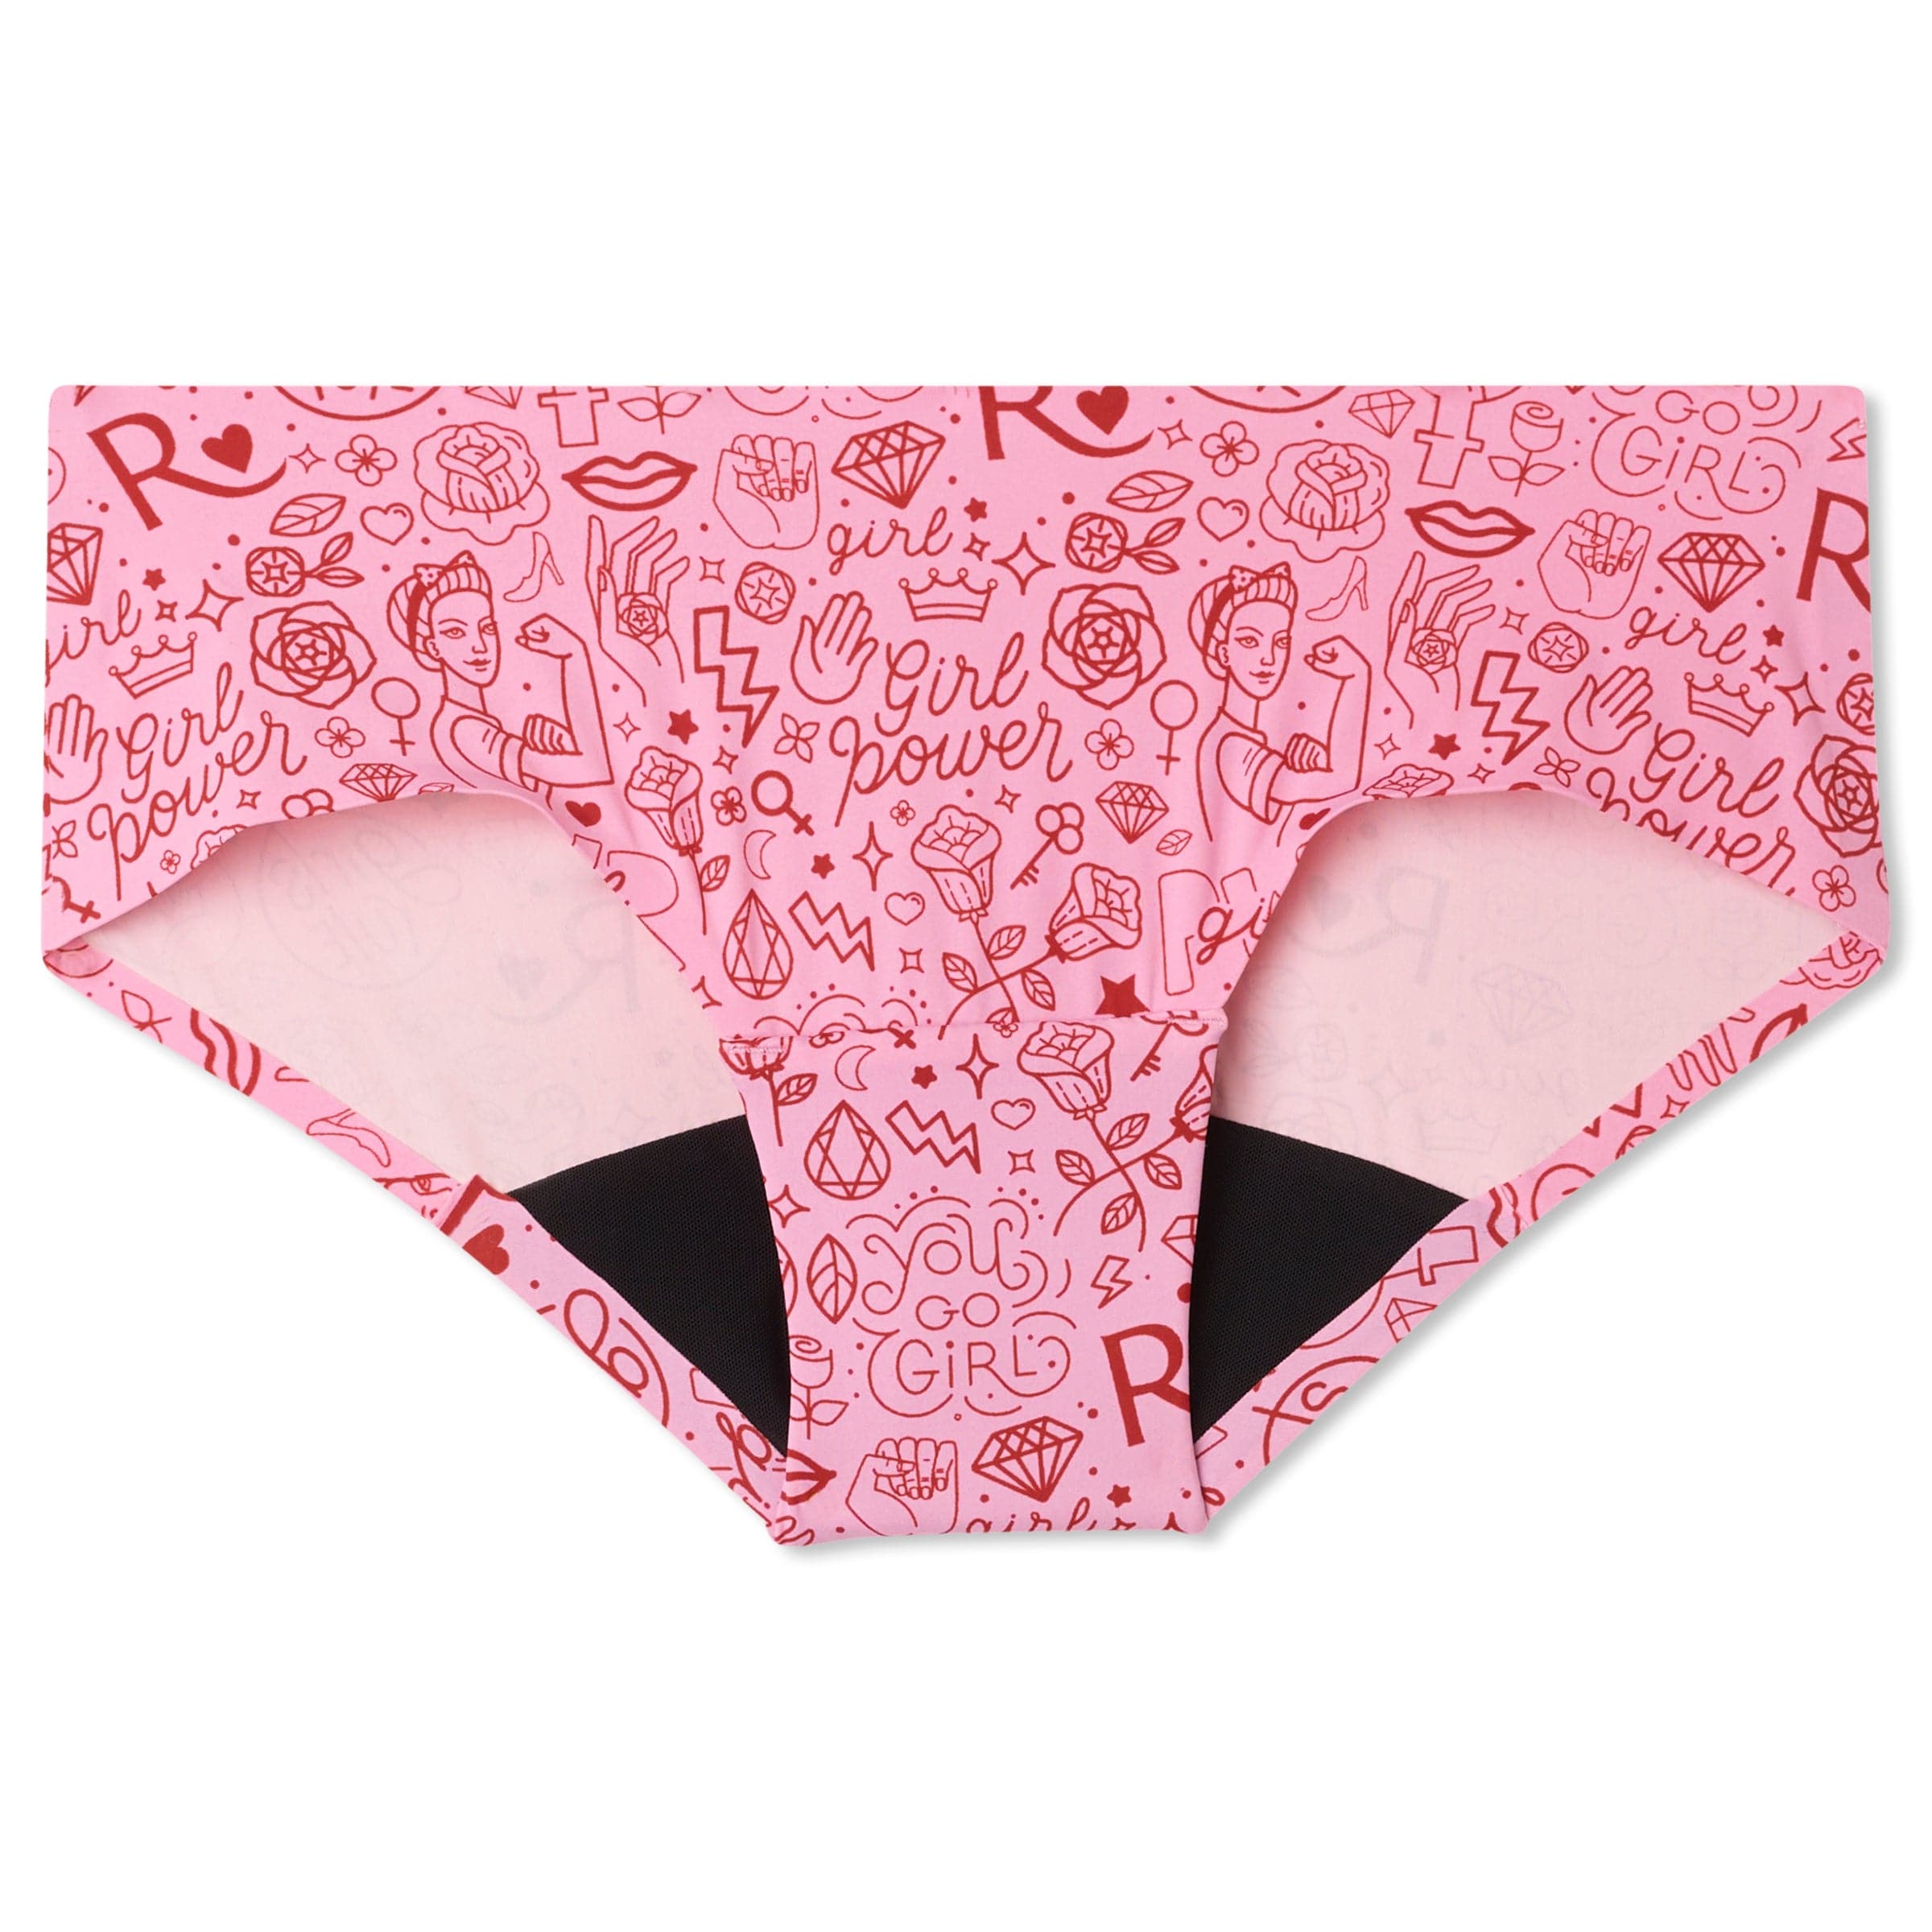 Period panties Ida – Hipster – Pink